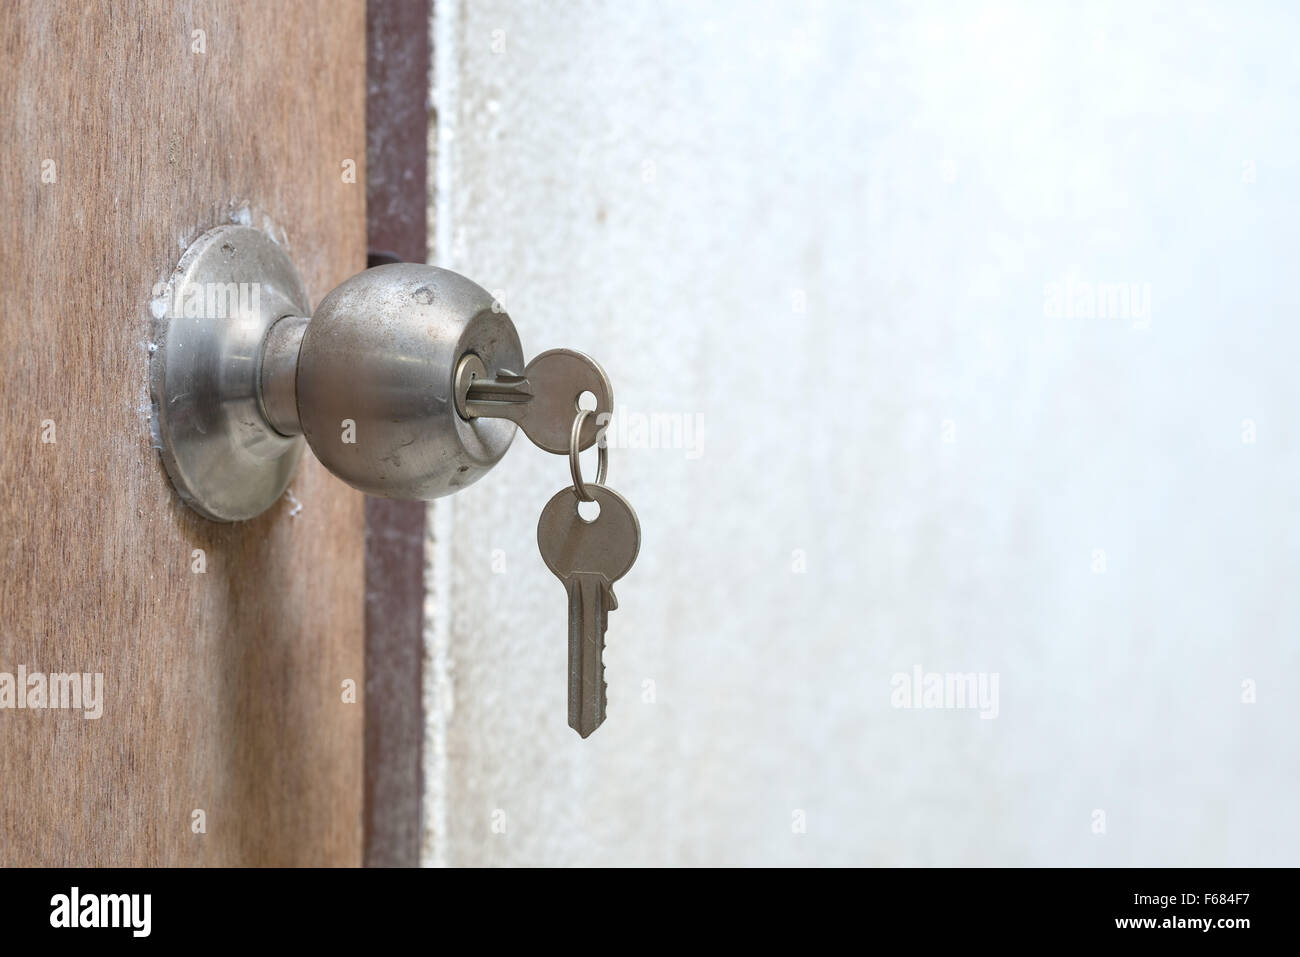 old doorknob and key Stock Photo